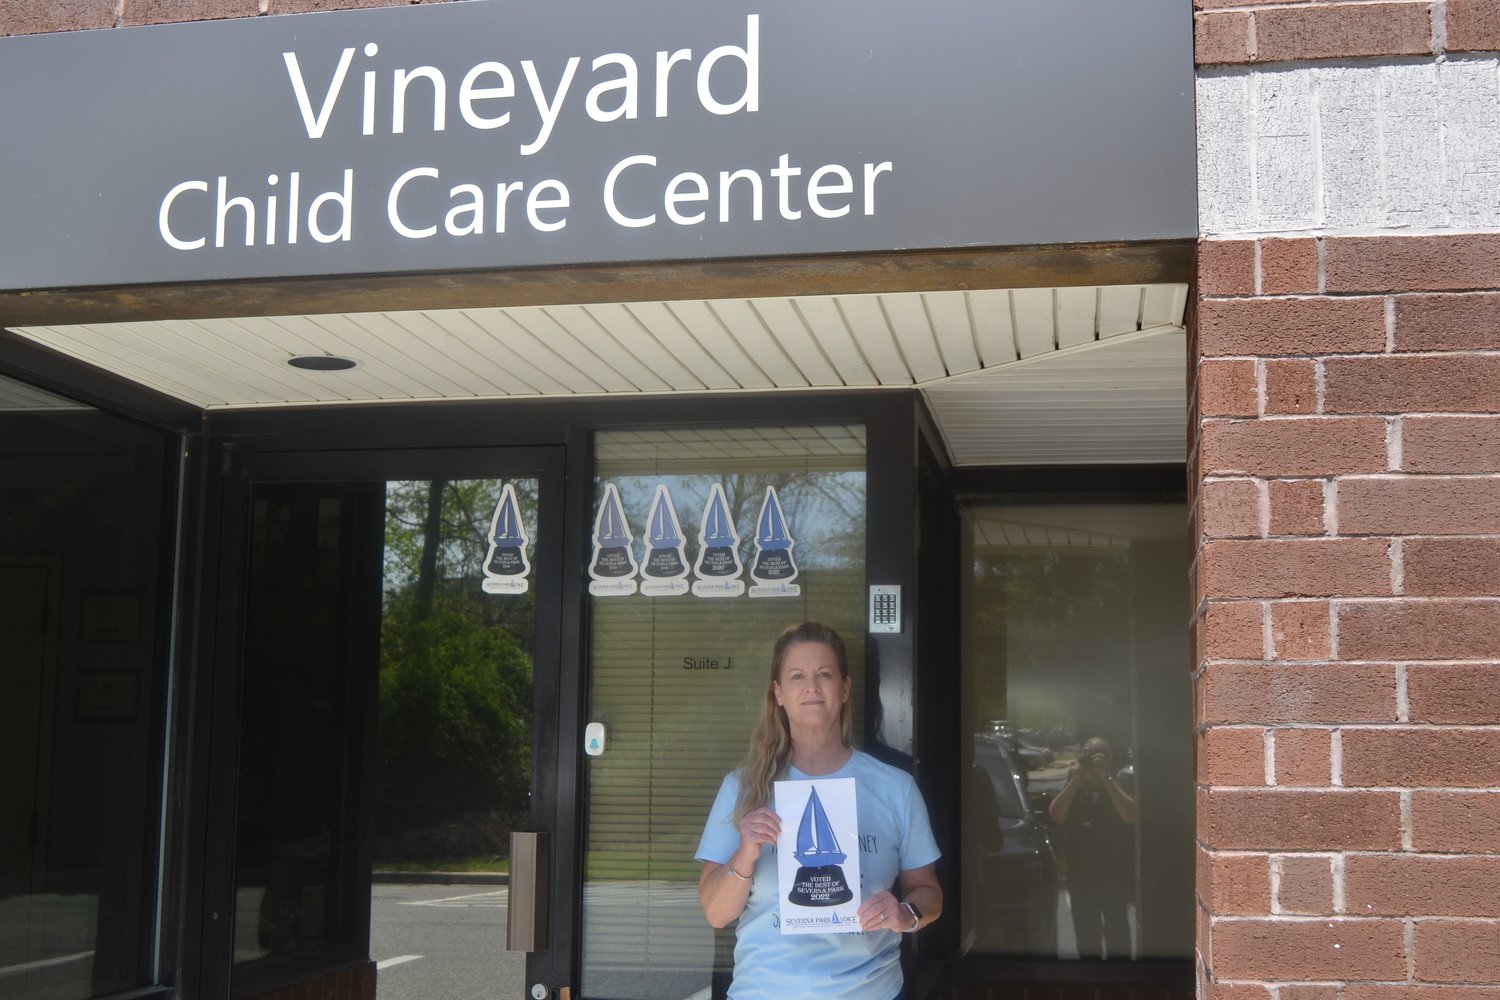 Vineyard Child Care Center won Best Day Care.